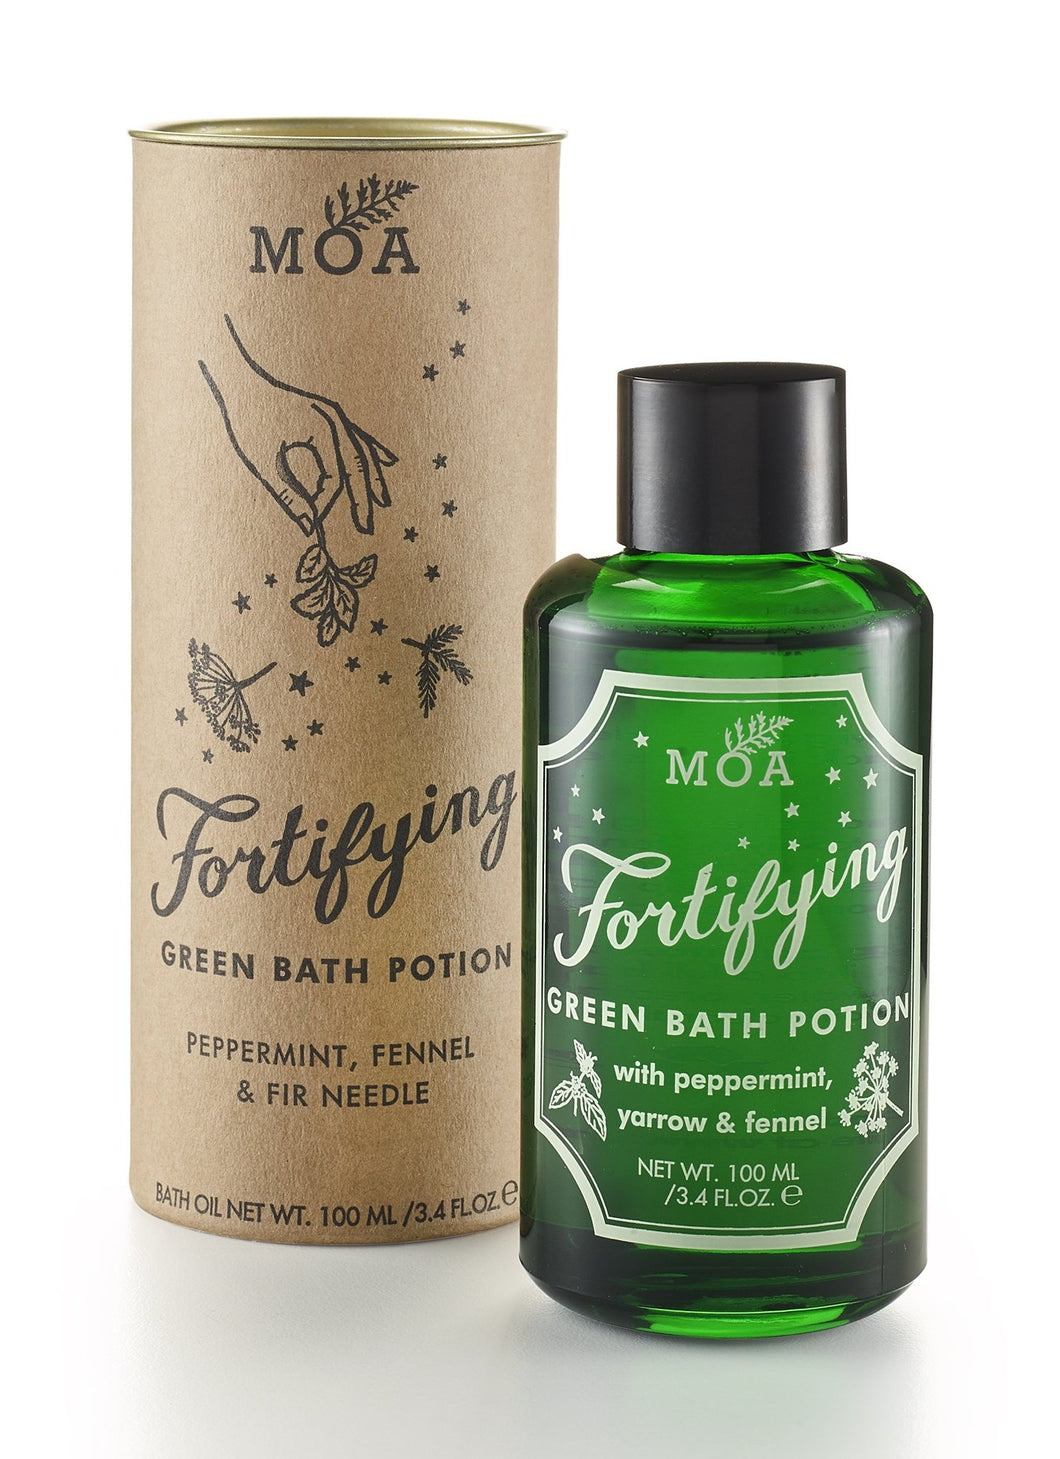 MOA Fortifying Green Bath Potion